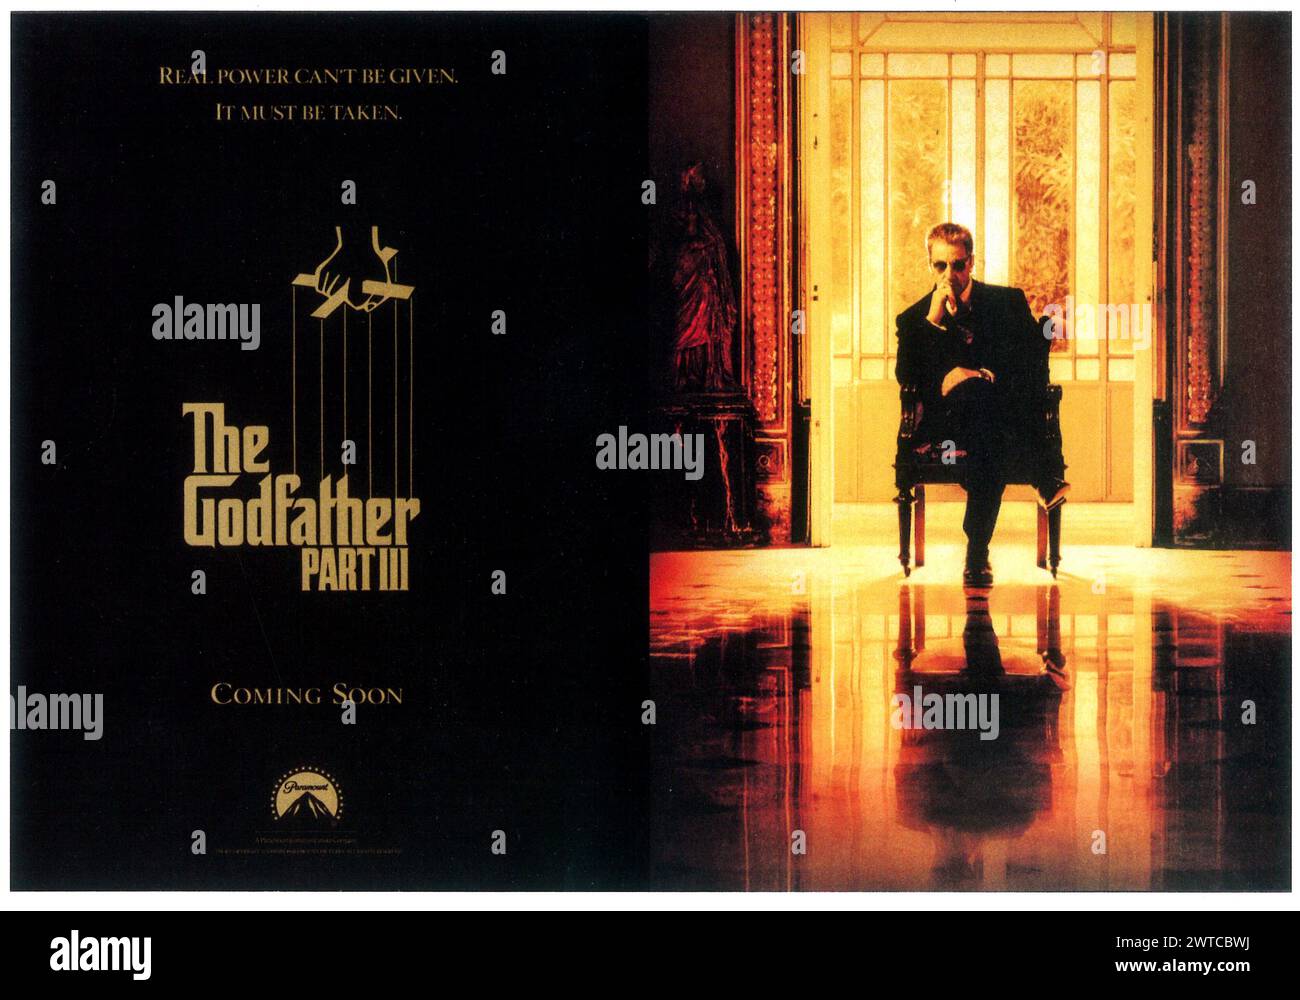 1990 The Godfather part III film cinéma annonce poster, dir. Francis Ford Coppola, avec Al Pacino Banque D'Images